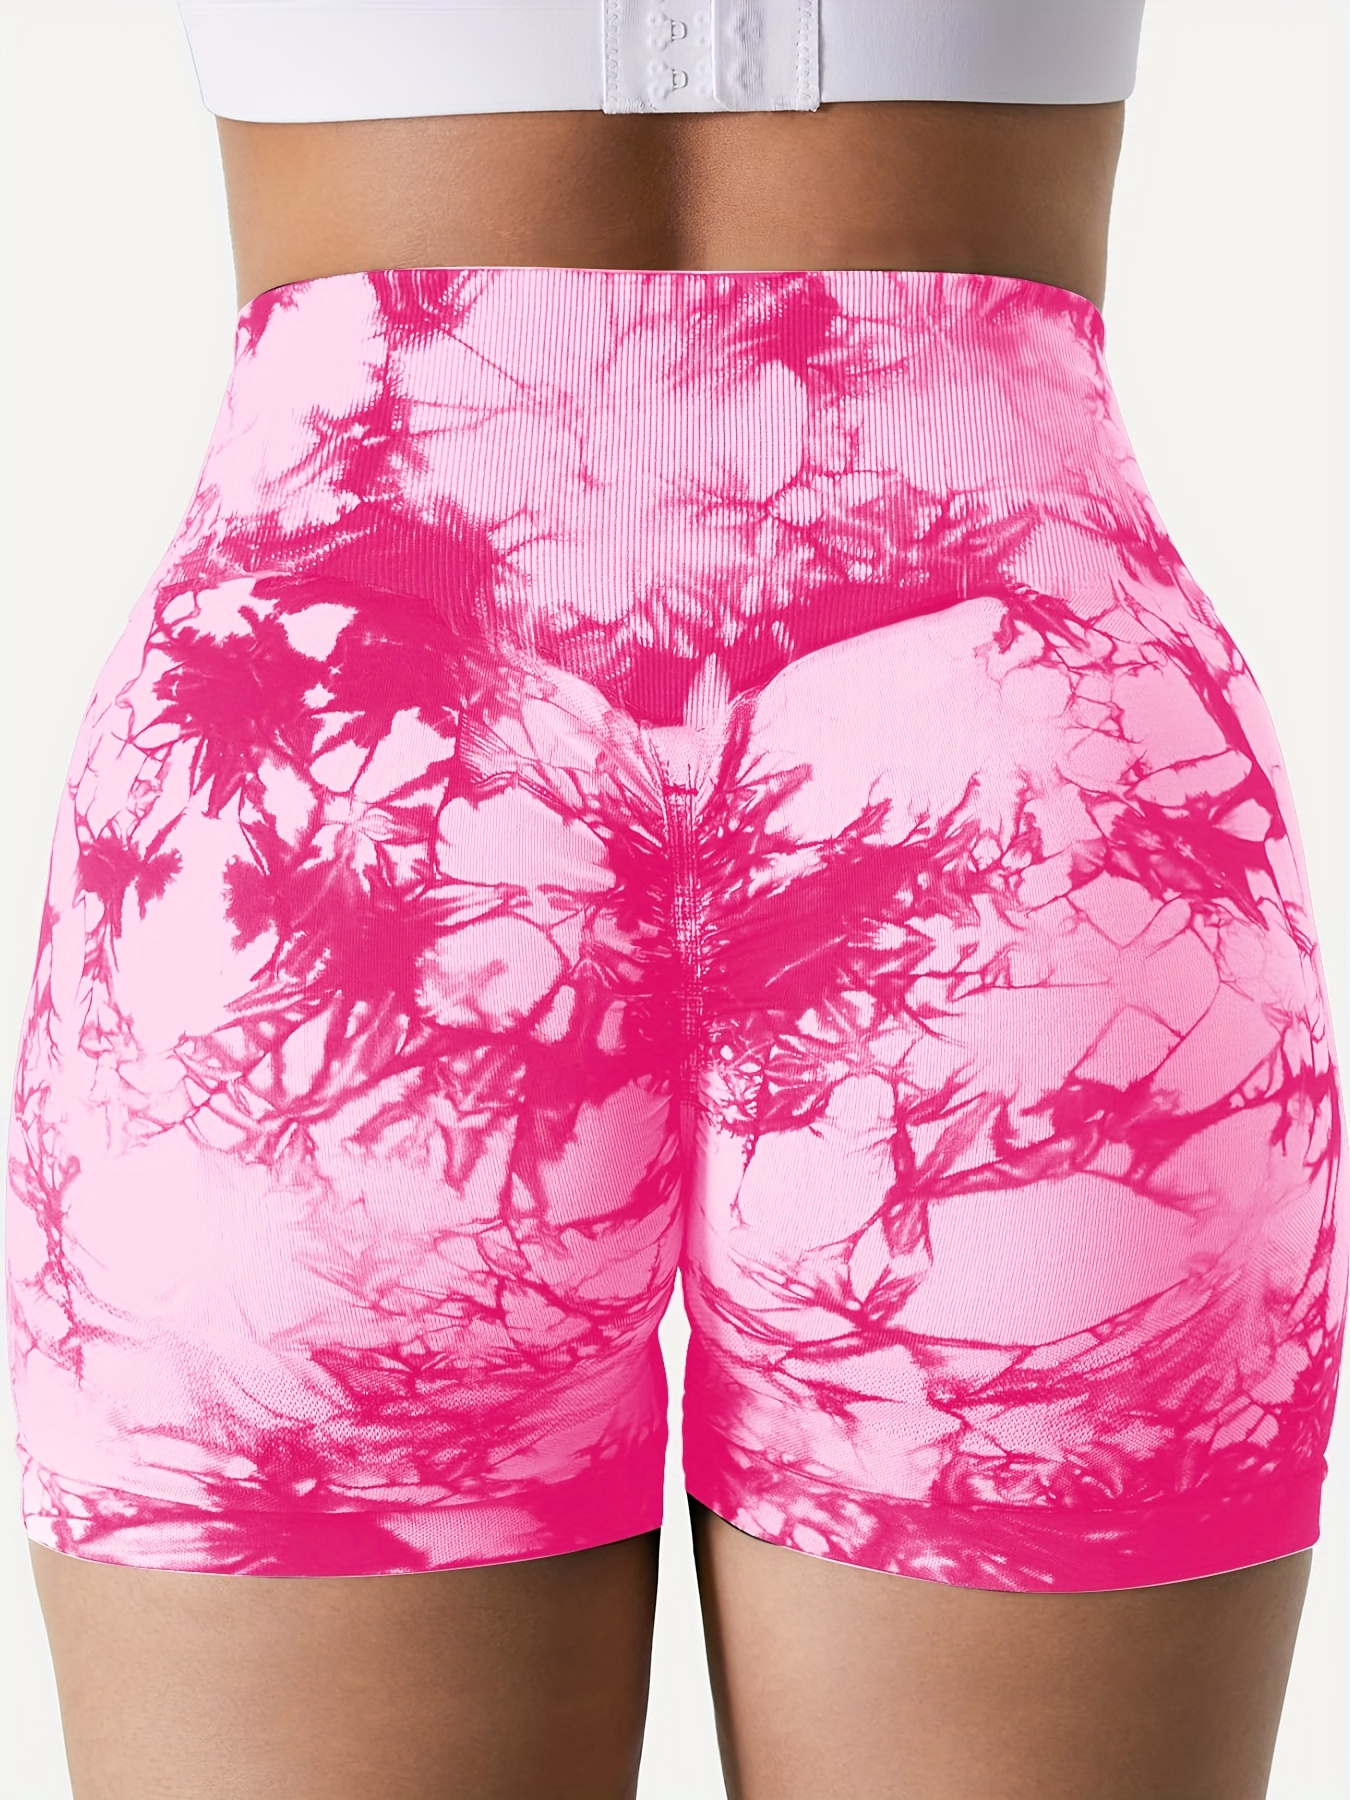 Workout Spandex Shorts for Women, High Waist Soft Yoga Bike Shorts, Rose  Red, XL